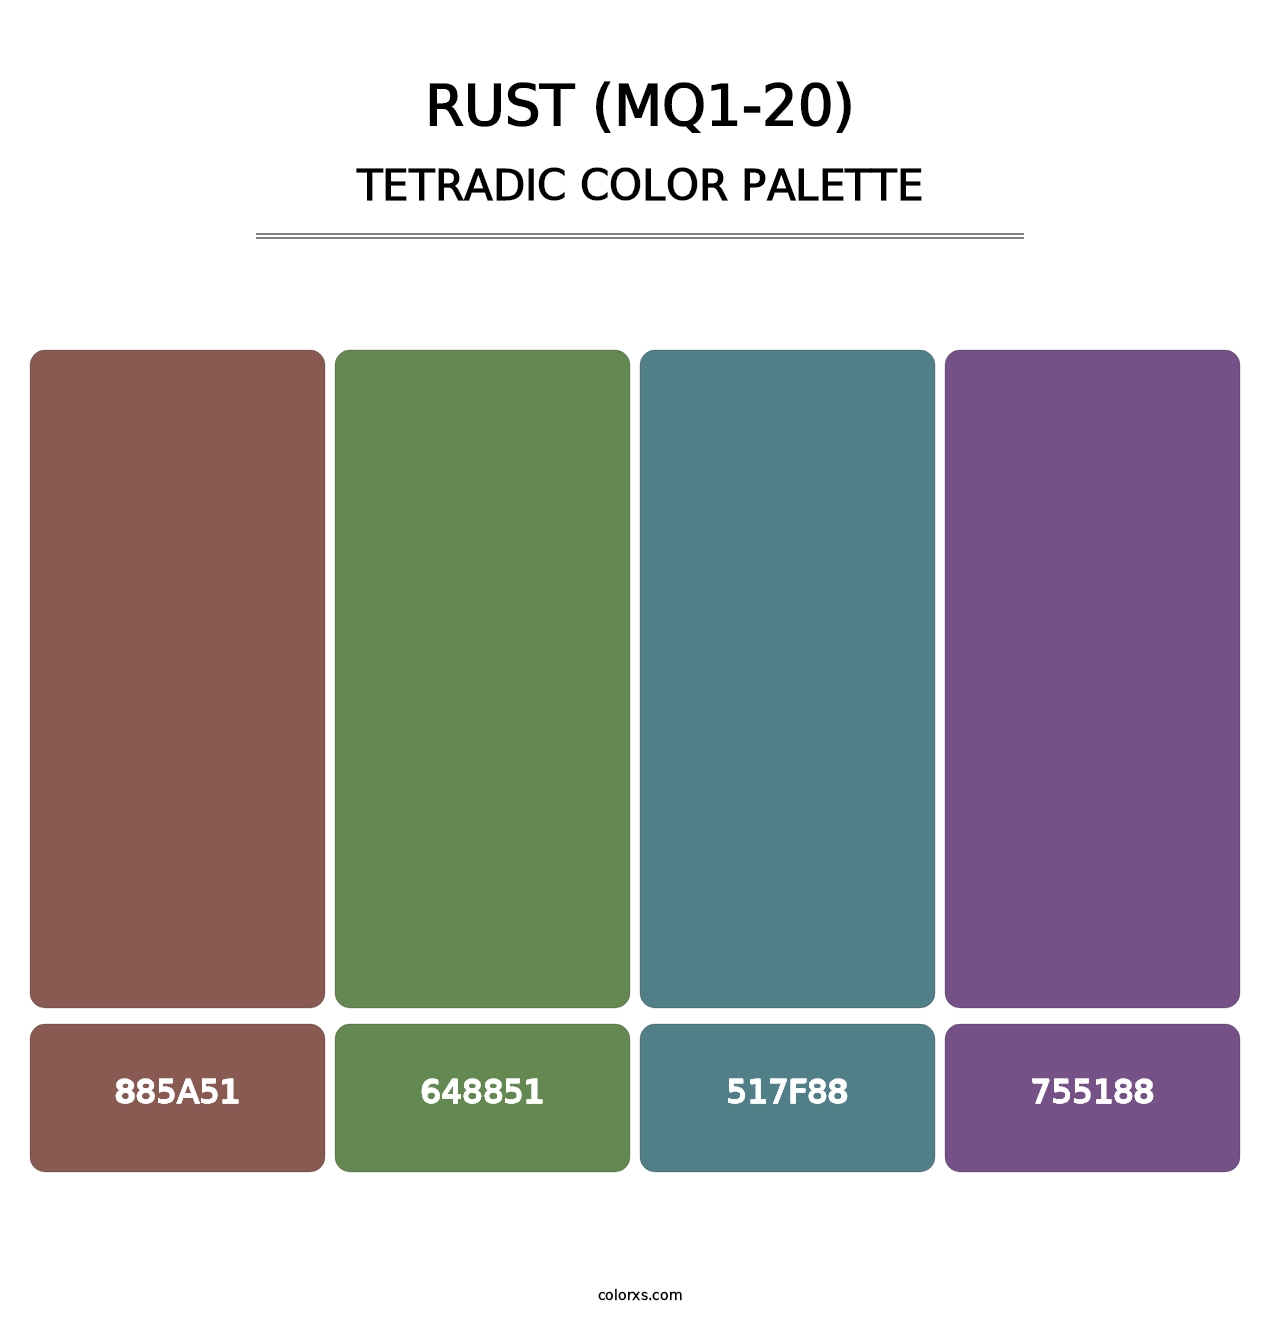 Rust (MQ1-20) - Tetradic Color Palette